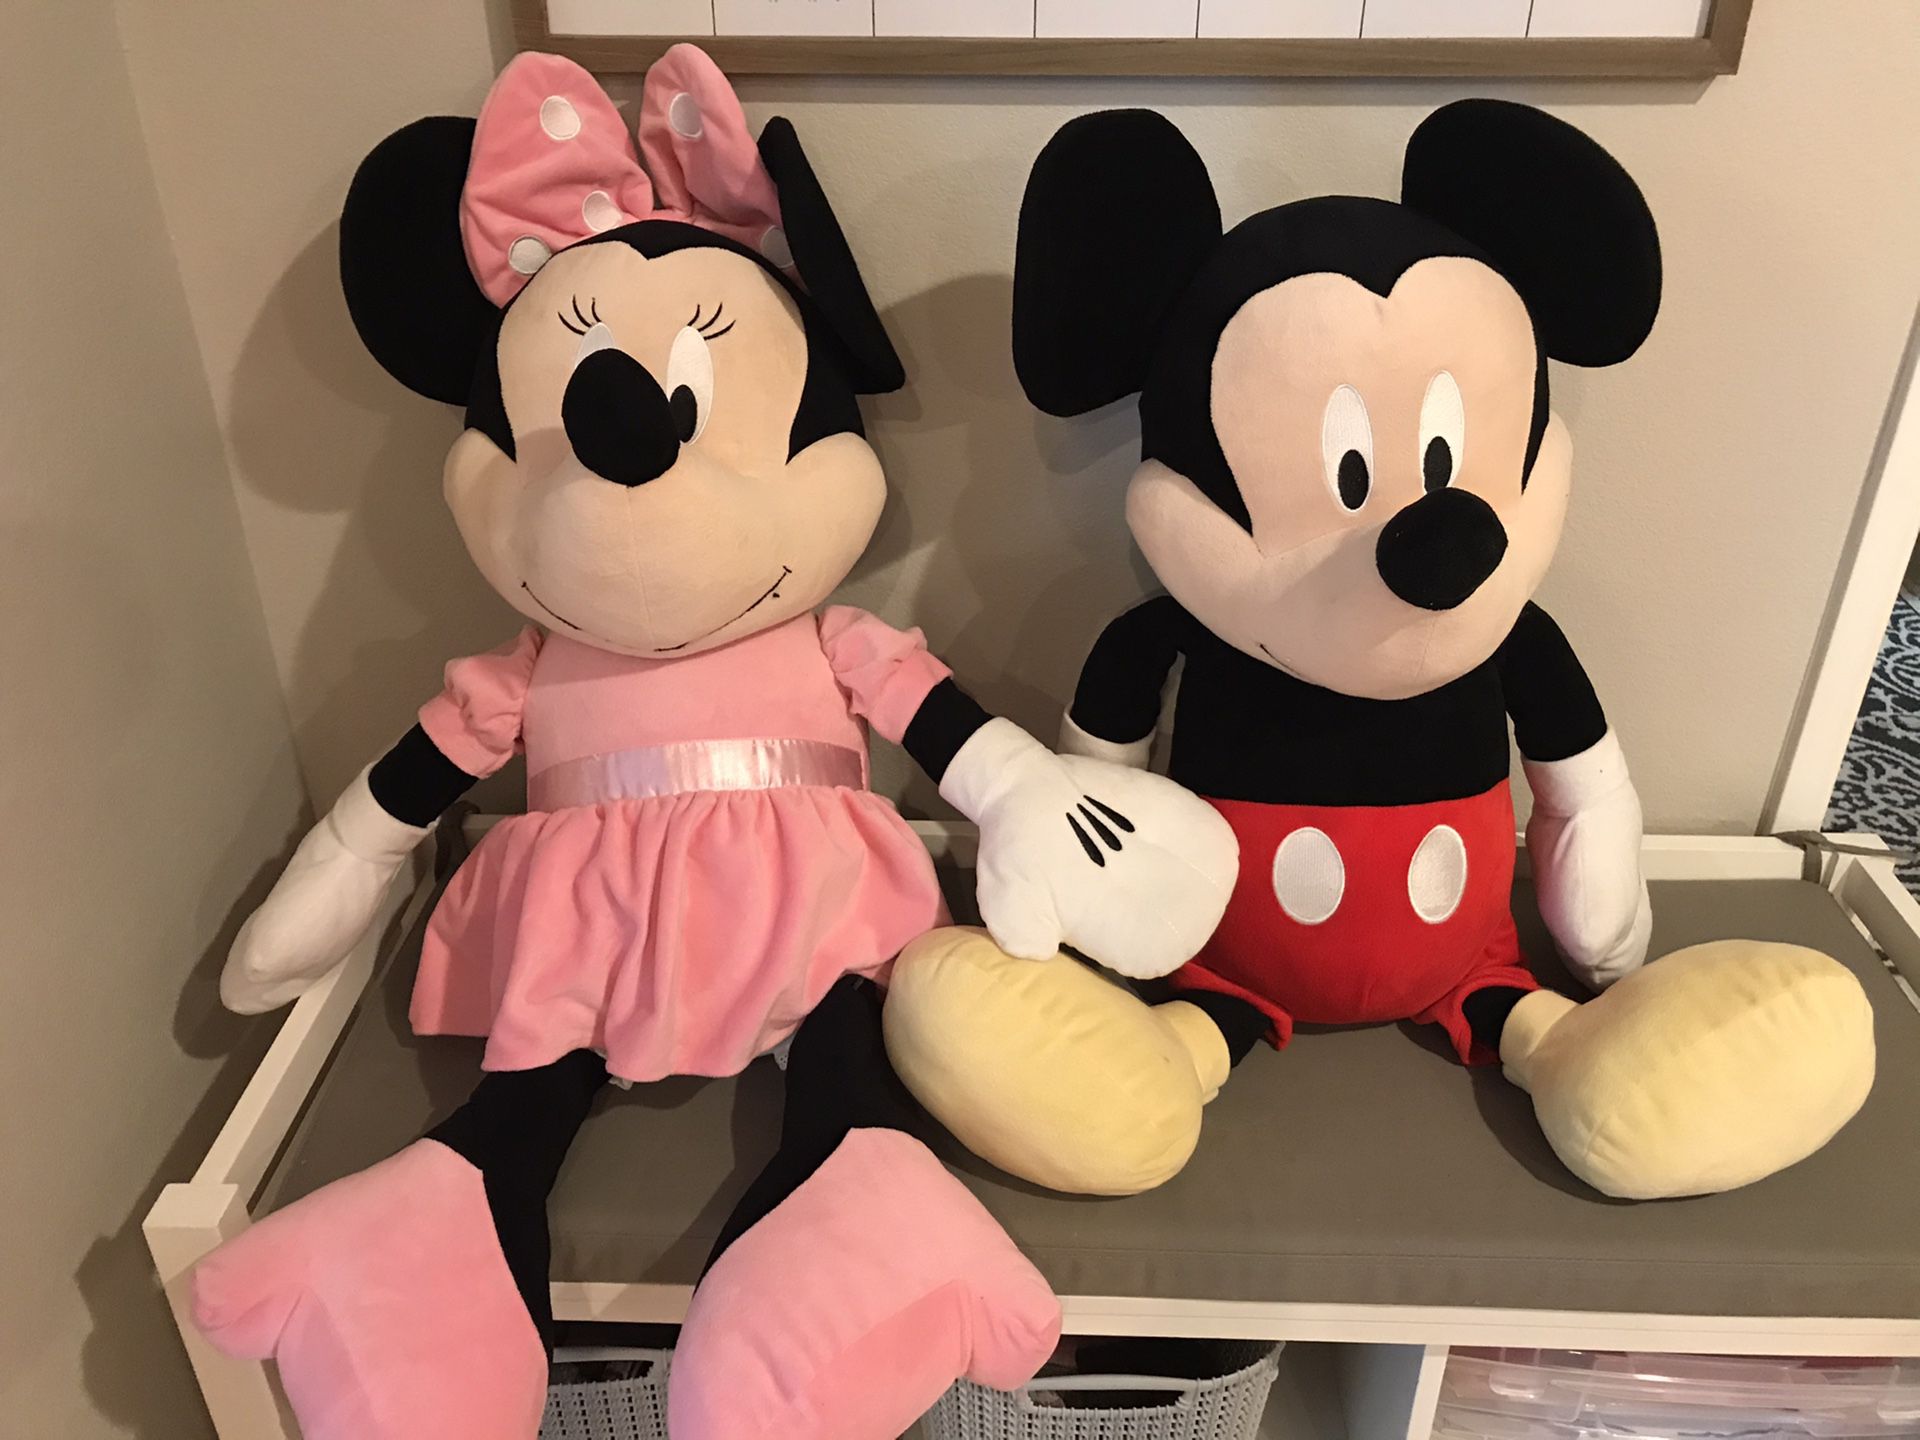 Disney Mickey and Minnie plush